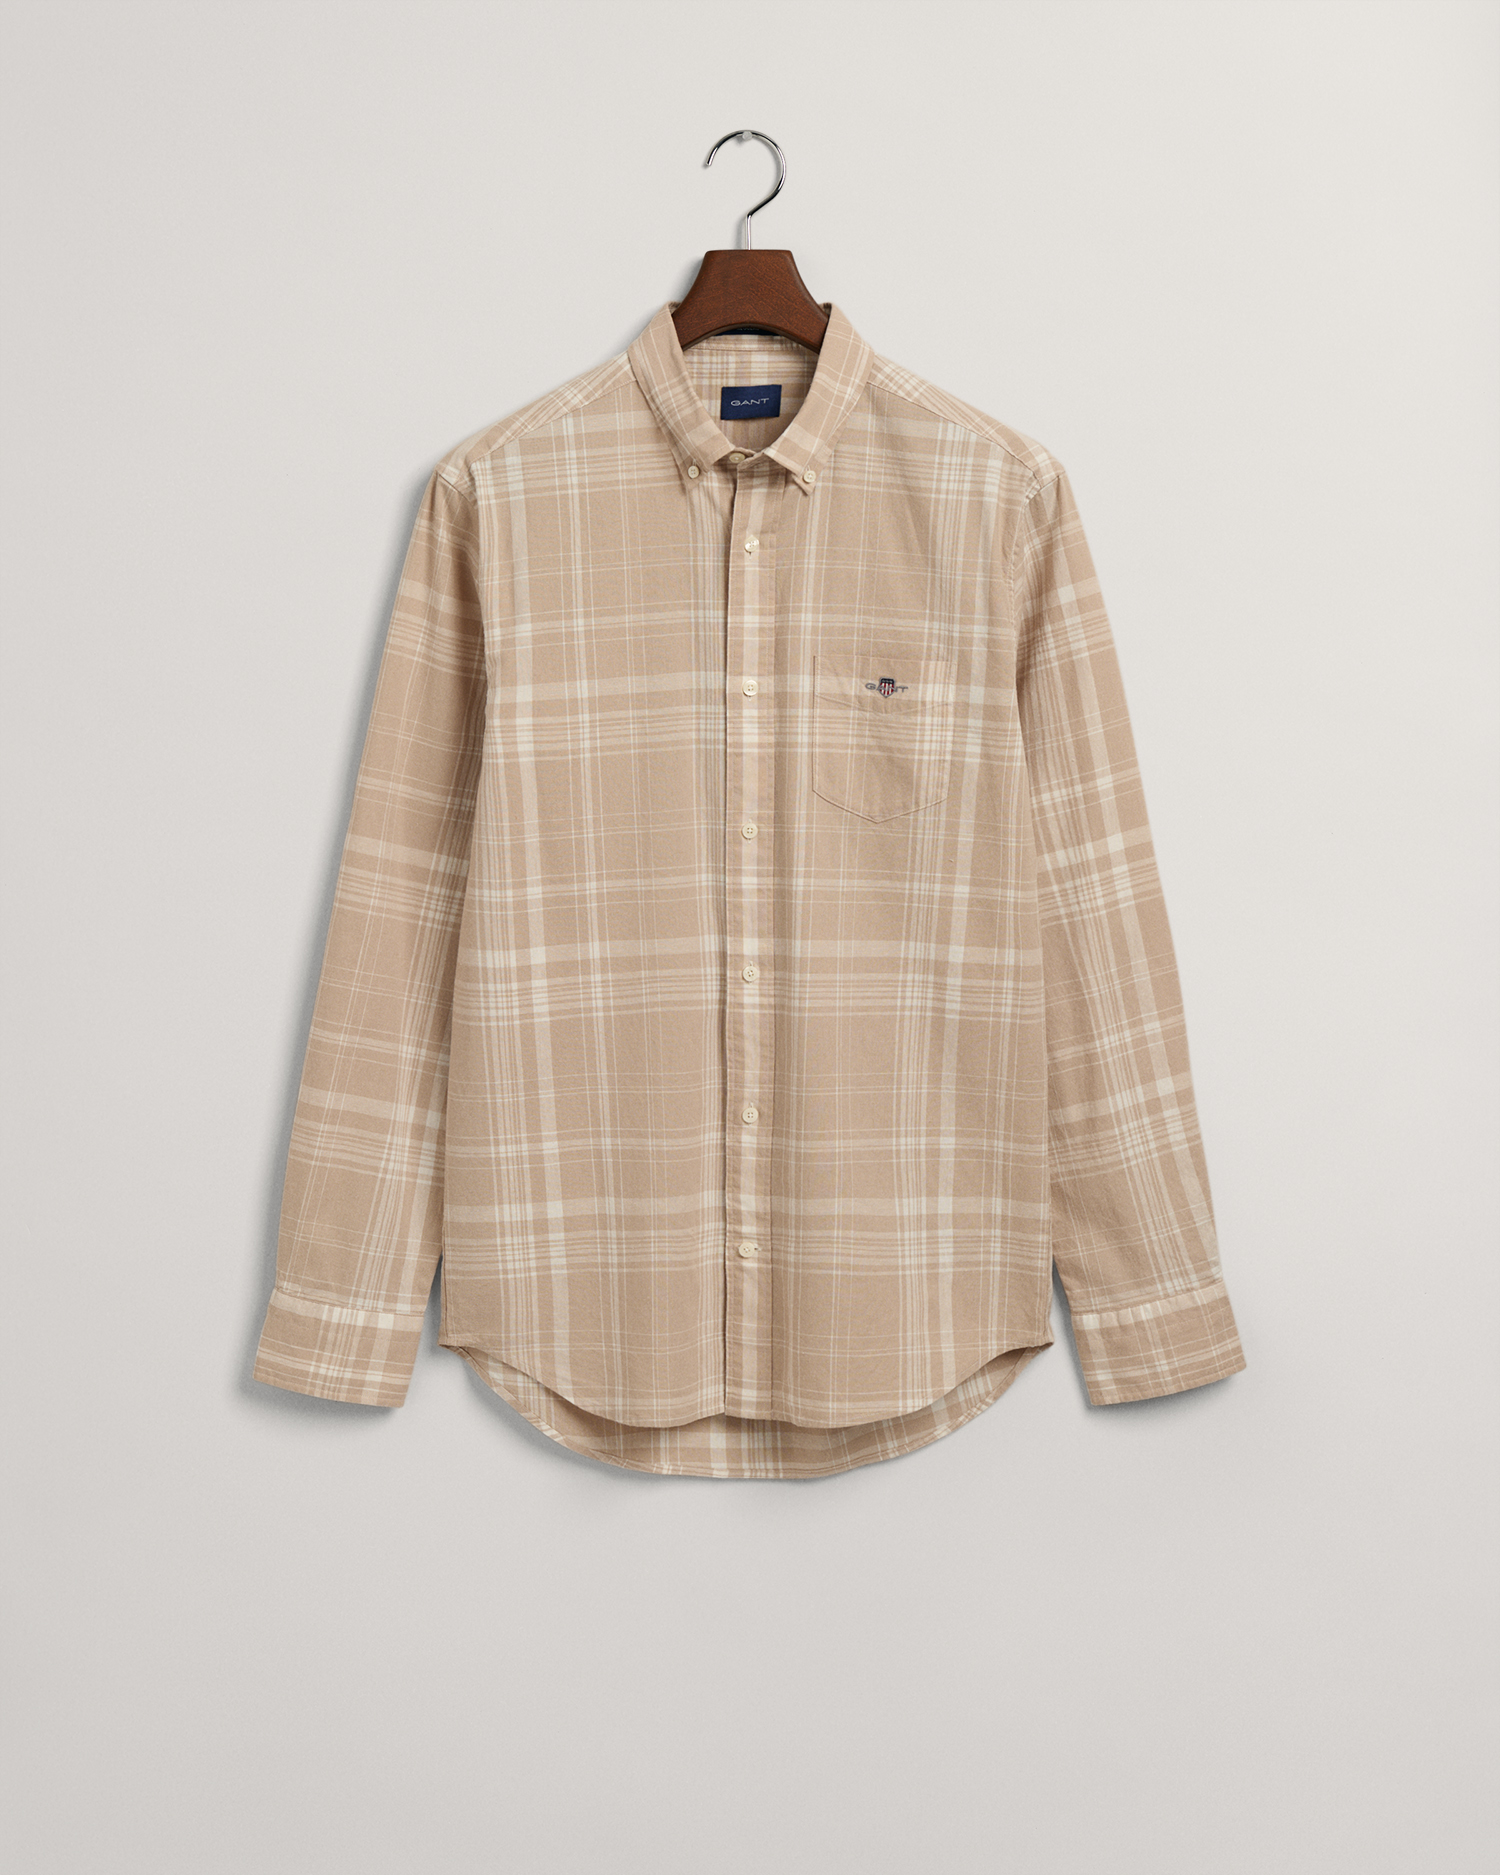 Gant Reg Fit Check Cotton Linen Shirt